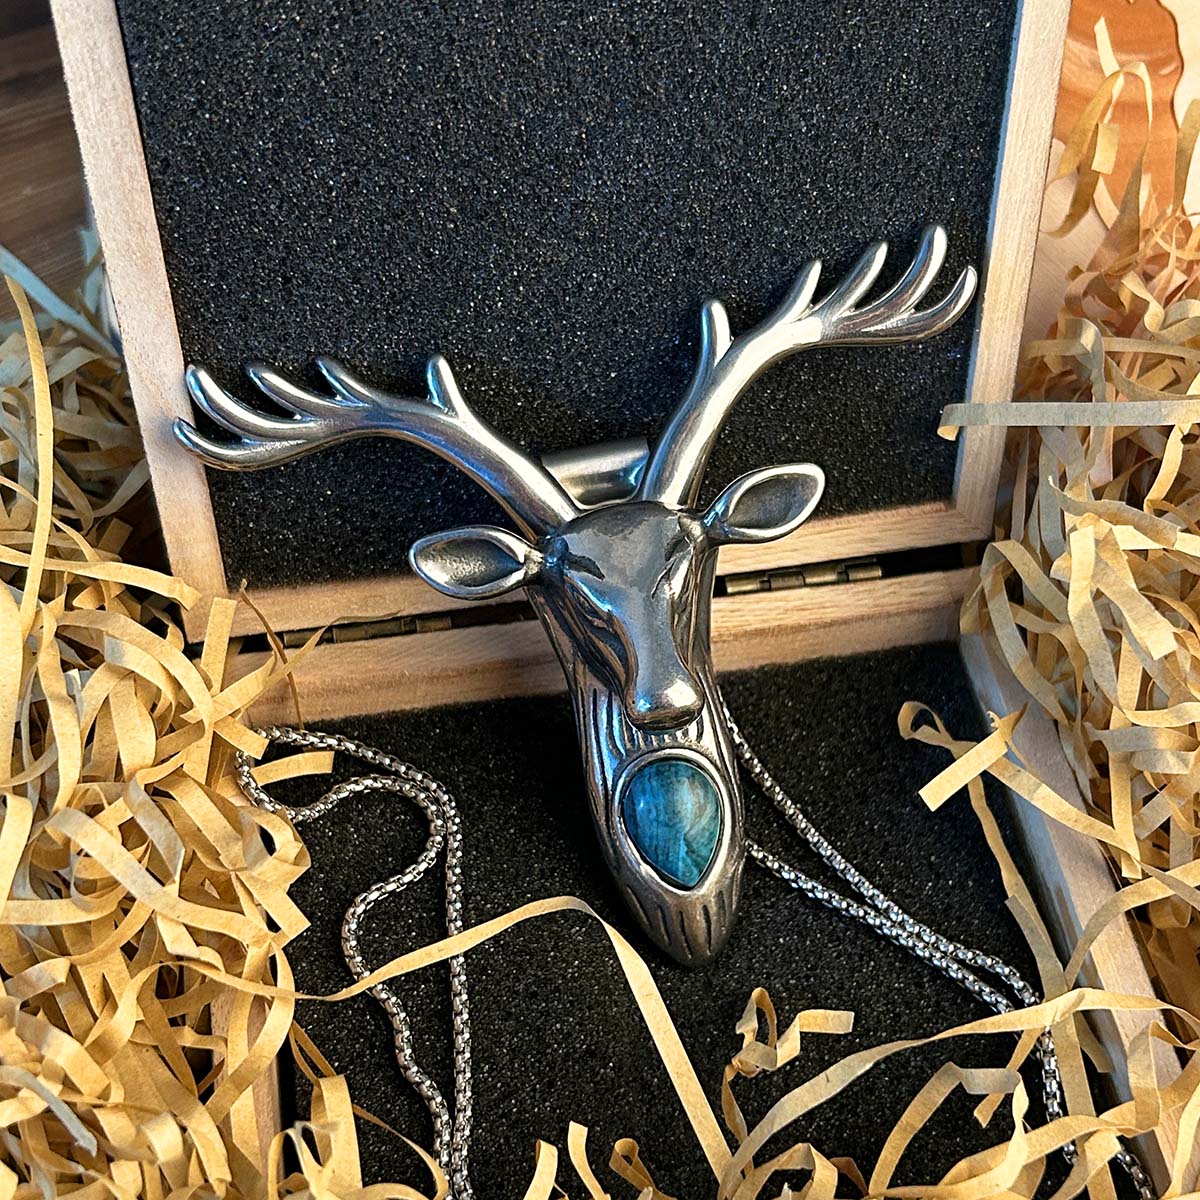 Deer Skull Necklace